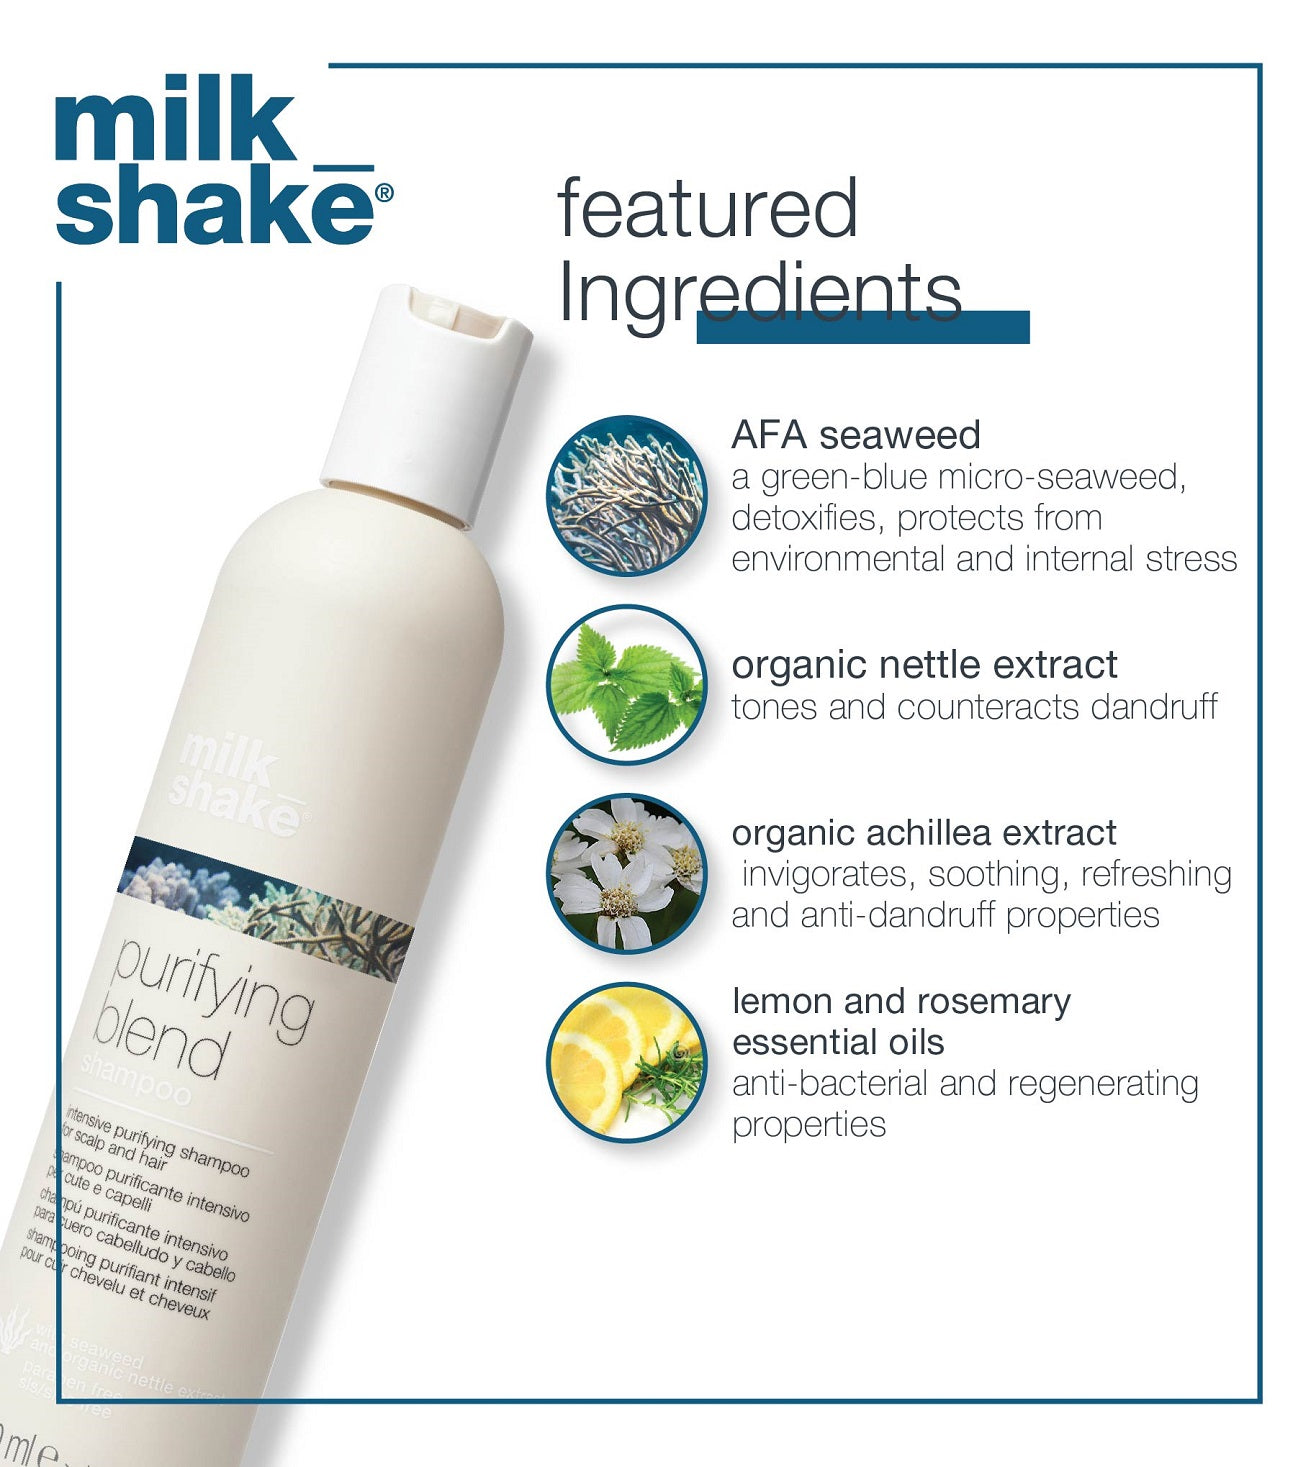 milk_shake purifying blend shampoo